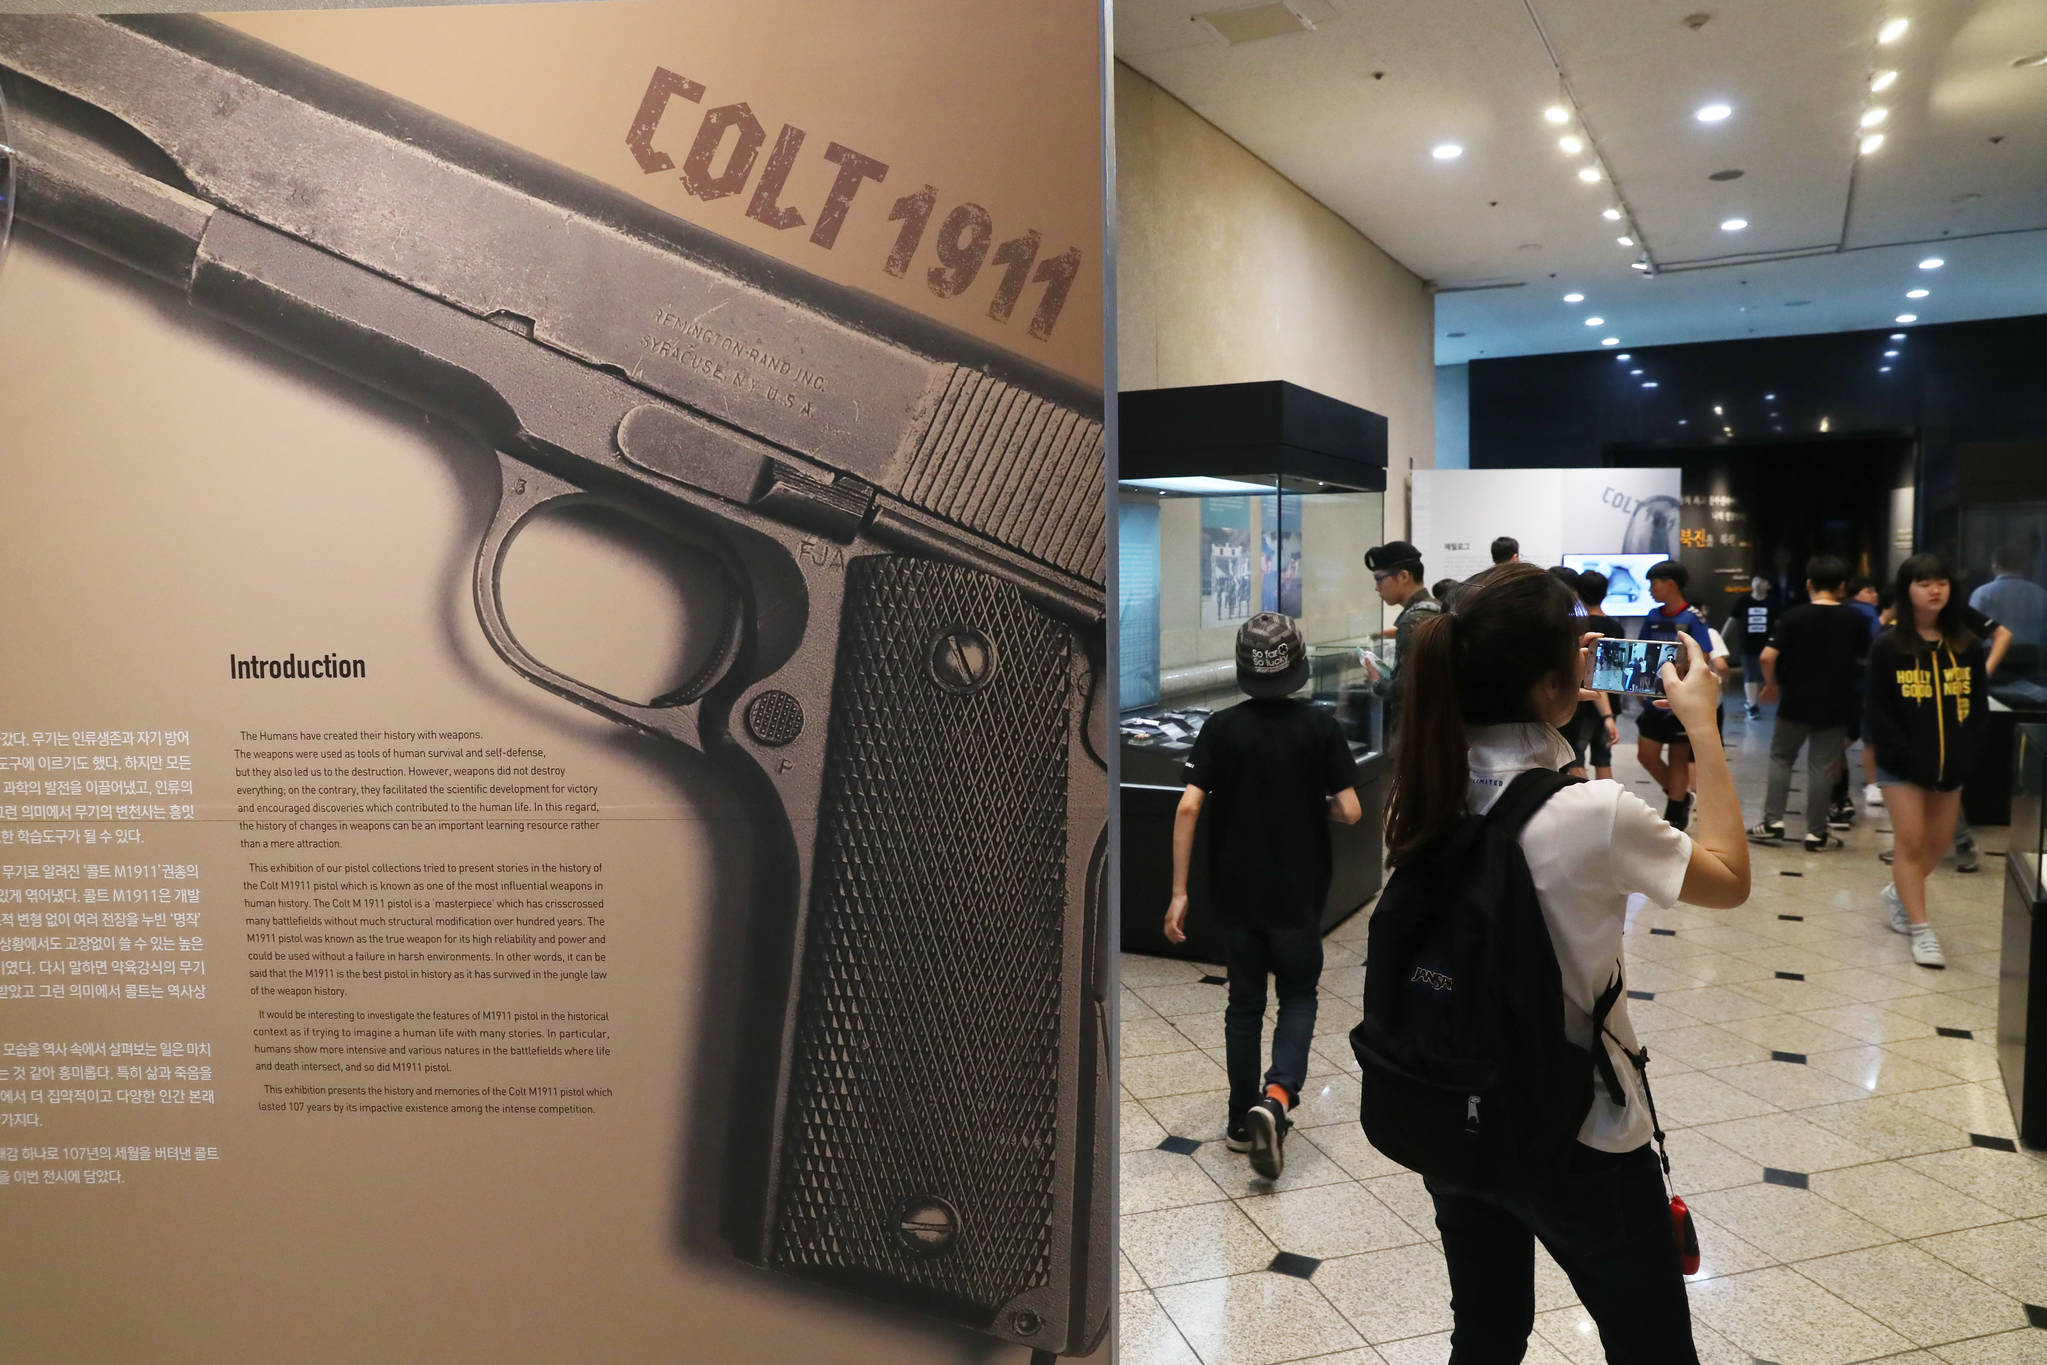 ‘COLT 1911’ 전시회가 5일 서울 용산 전쟁기념관에서 열렸다. 이 전시는 그동안 알려지지 않은 콜트(Colt) 권총에 대한 이야기를 관련 유물 40여 점과 함께 살펴볼 수 있다. 우상조 기자